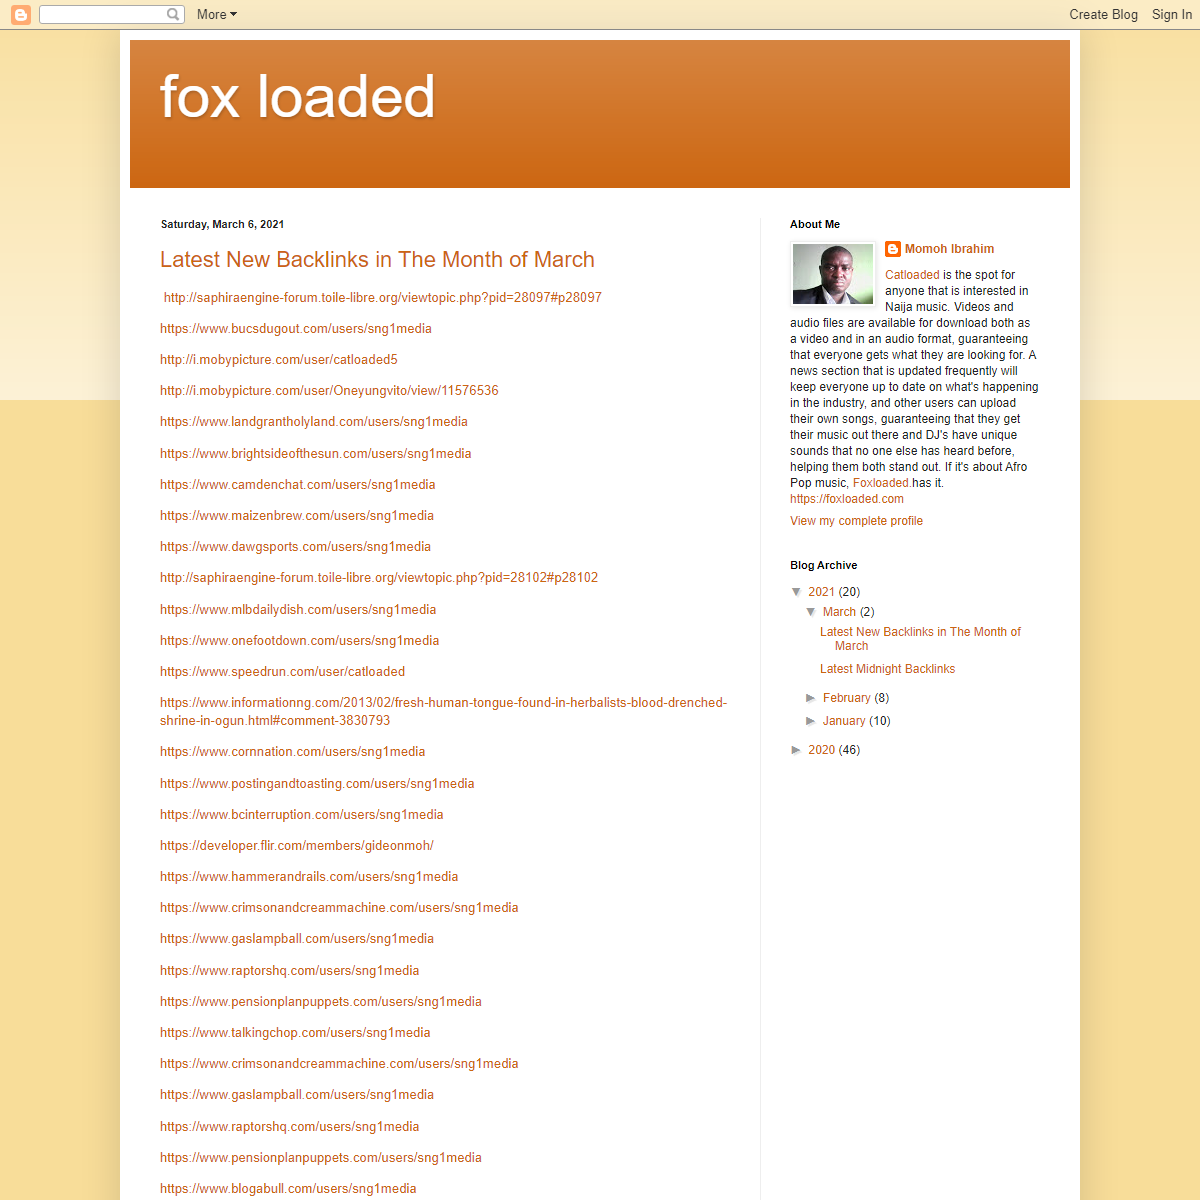 A complete backup of https://foxloadeduk.blogspot.com/